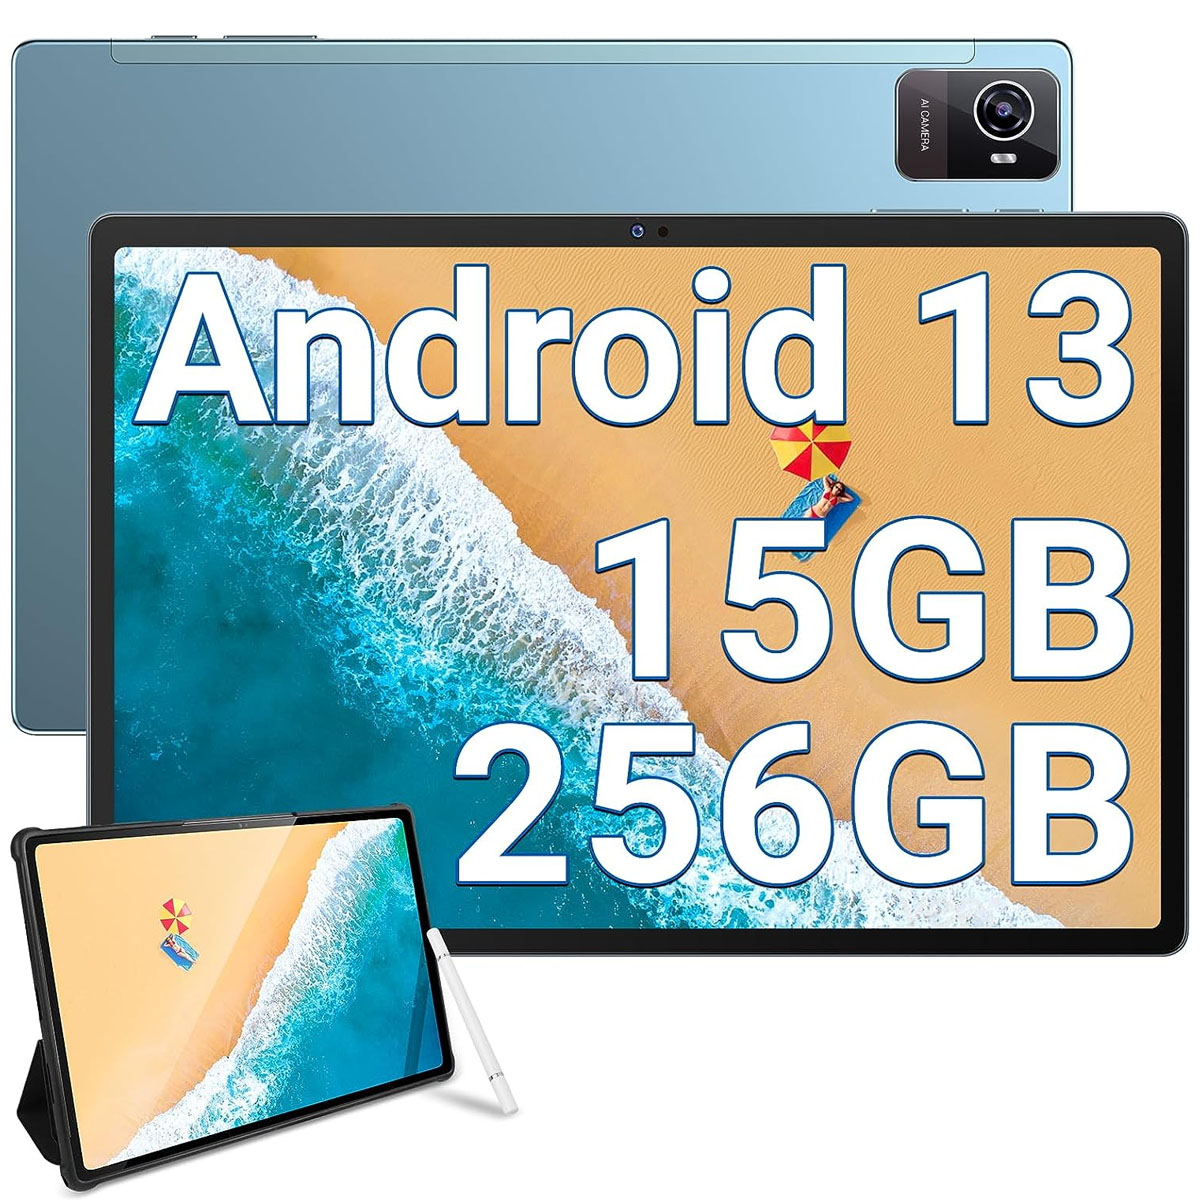 Blau 8250mAh Zoll, OKT3 Android Tablet, OUKITEL 4G, 15GB+256GB/2TB TF 256 10,5 GB, 13